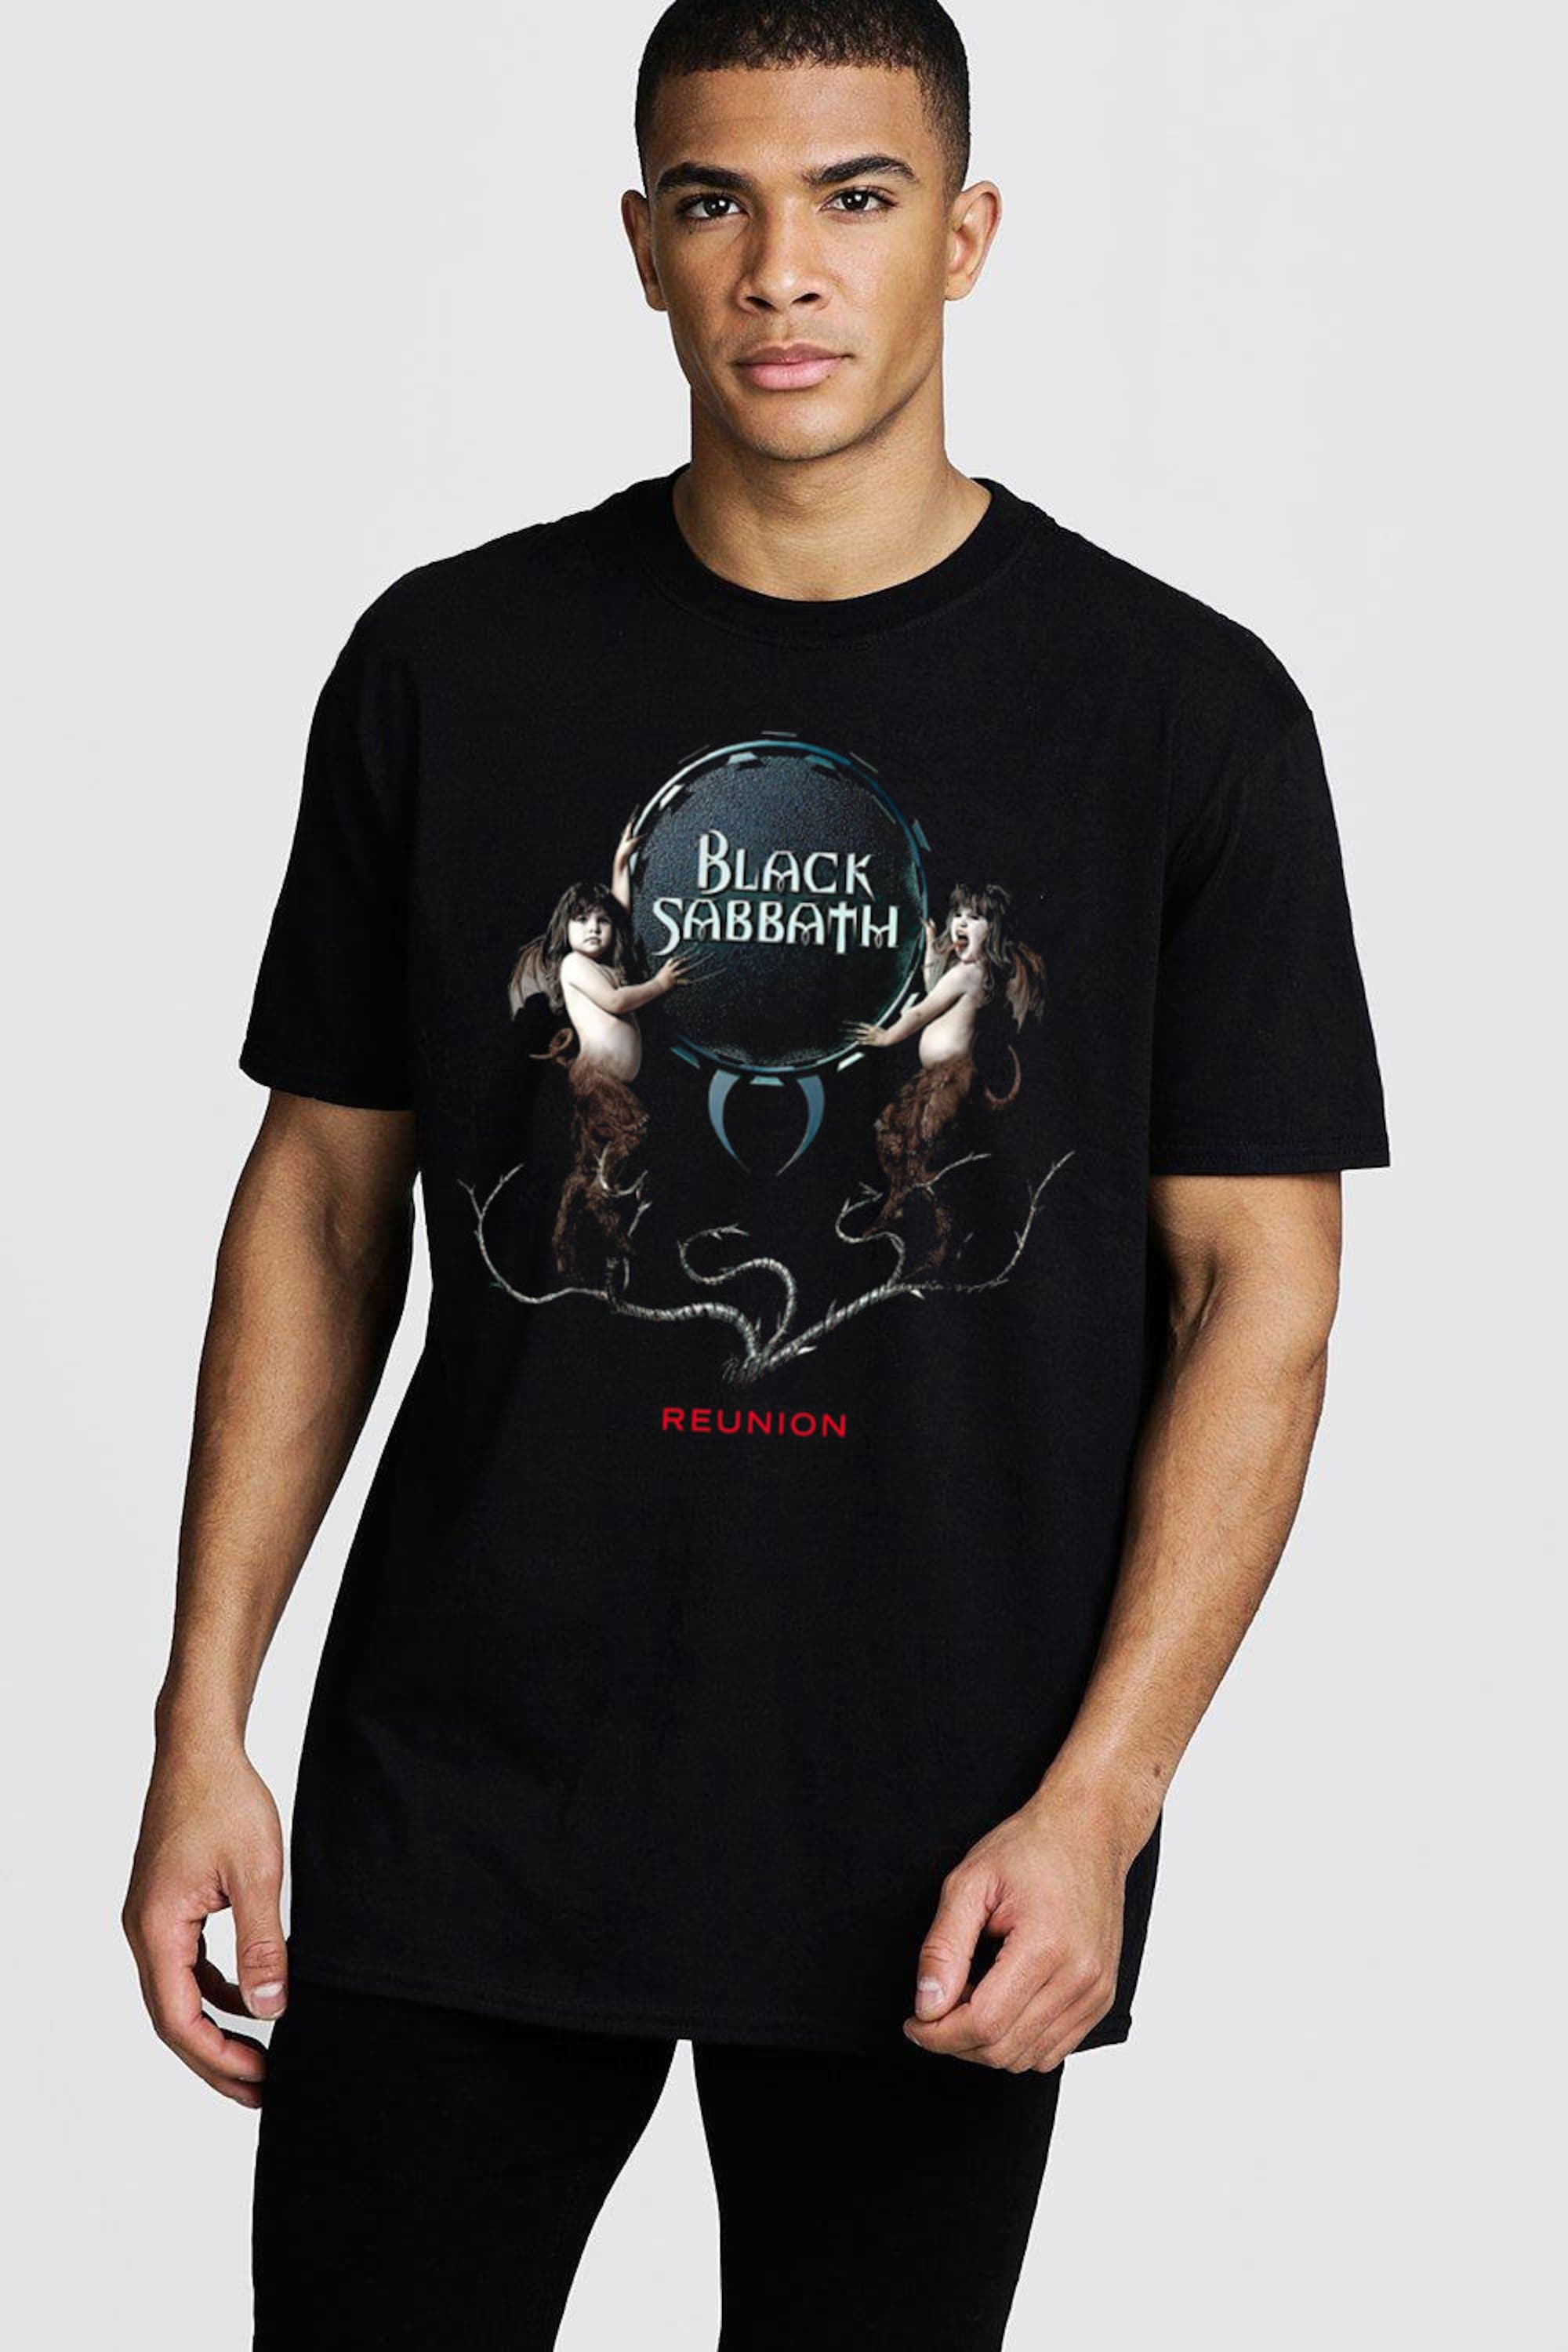 Discover Black Sabbath Reunion Gift Tee for Men Women Unisex T-Shirt